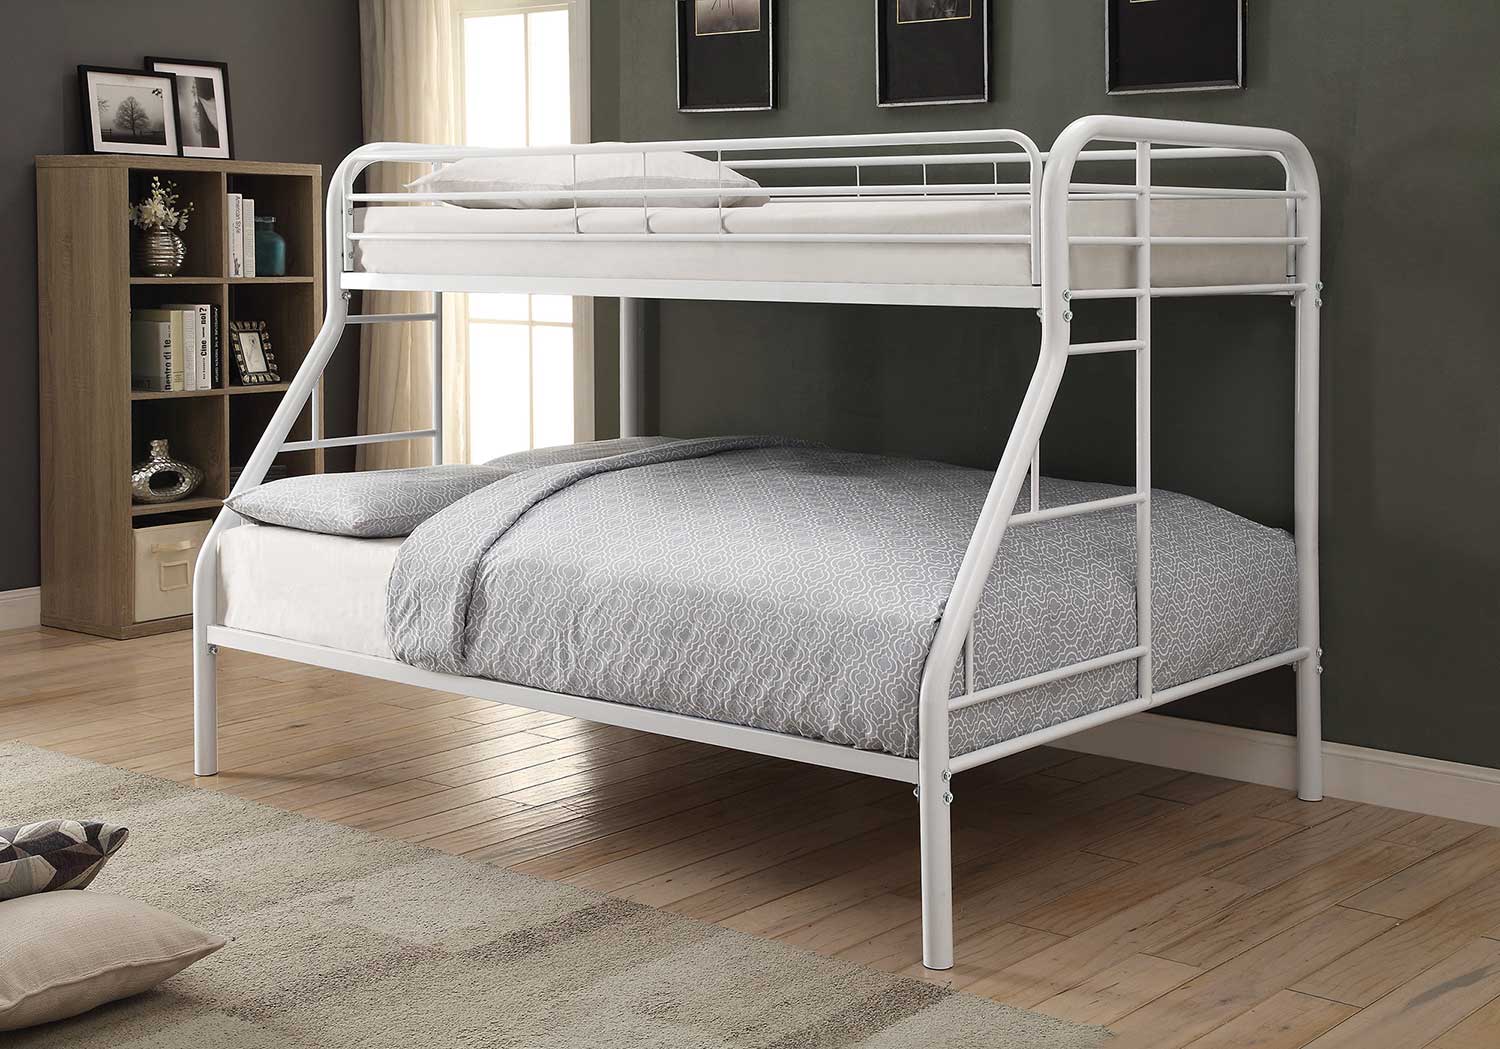 Coaster Morgan Twin/Full Size Bunk Bed - White